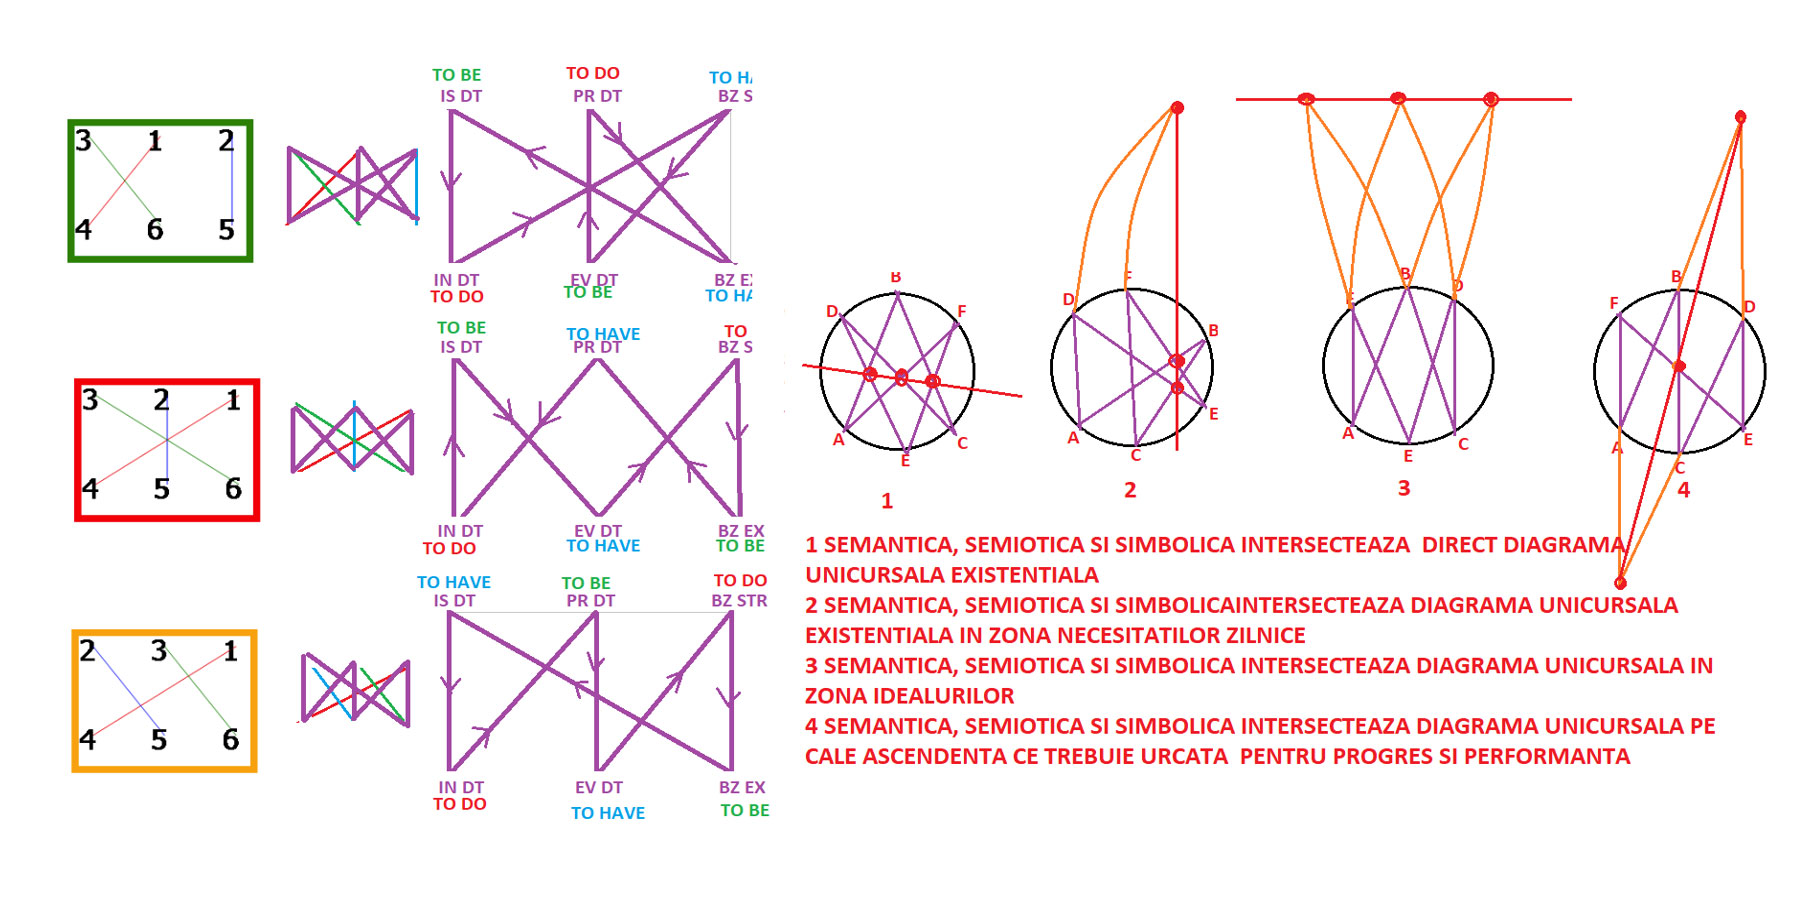 Figura. Semantica, Semiotica si Simbolica - Metode de intersectie a diagramei unicursale